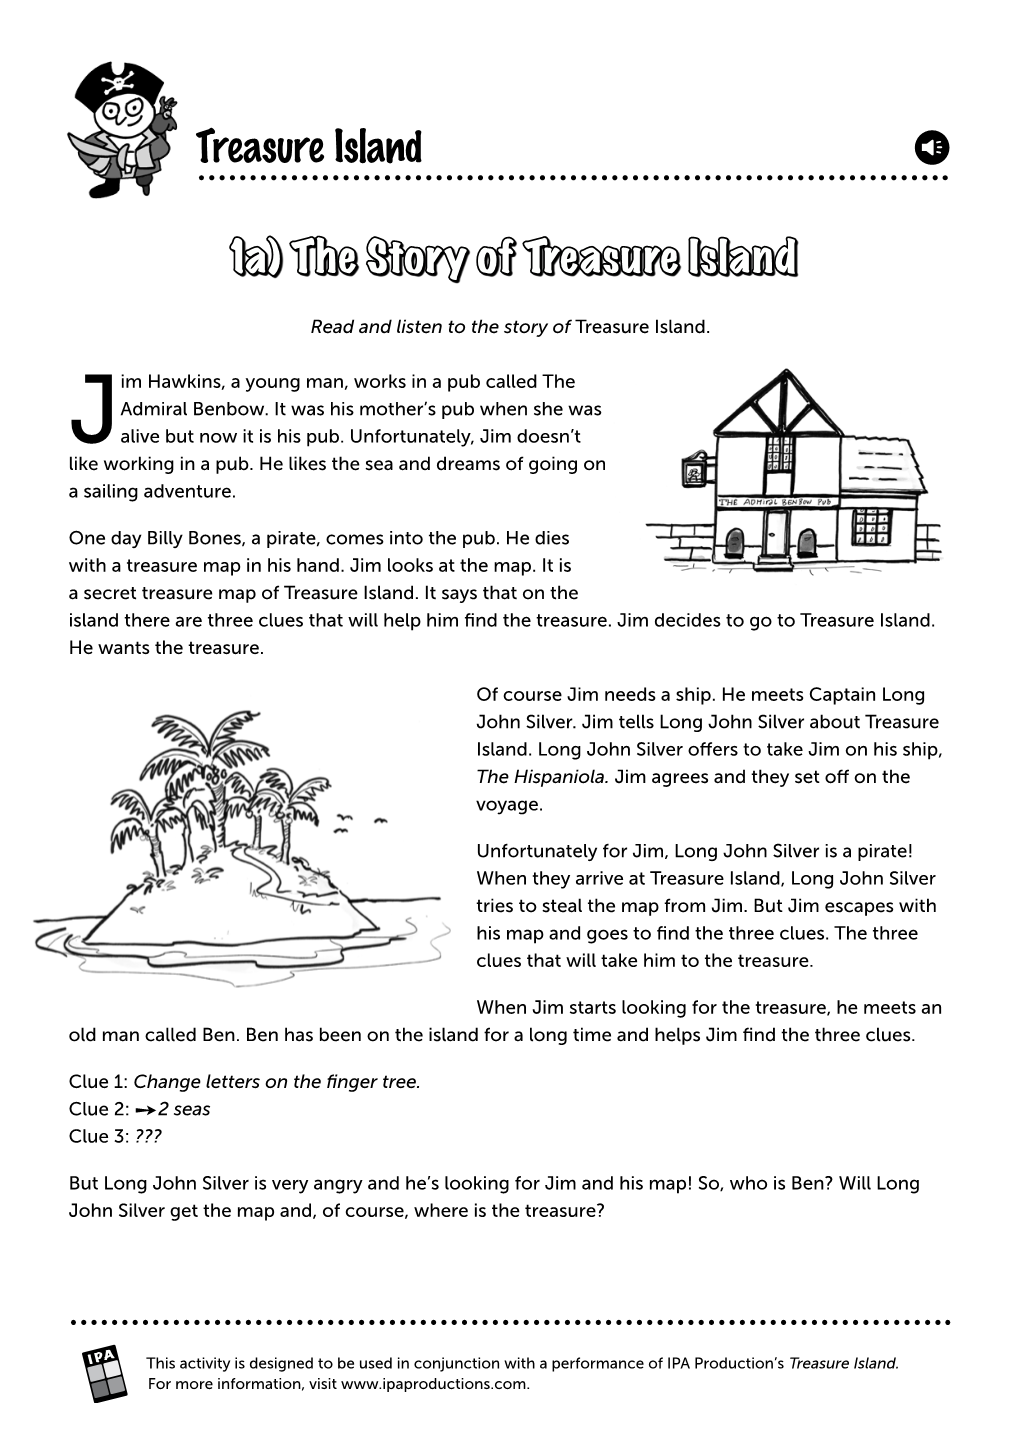 Treasure Island 1A) the Story of Treasure Island